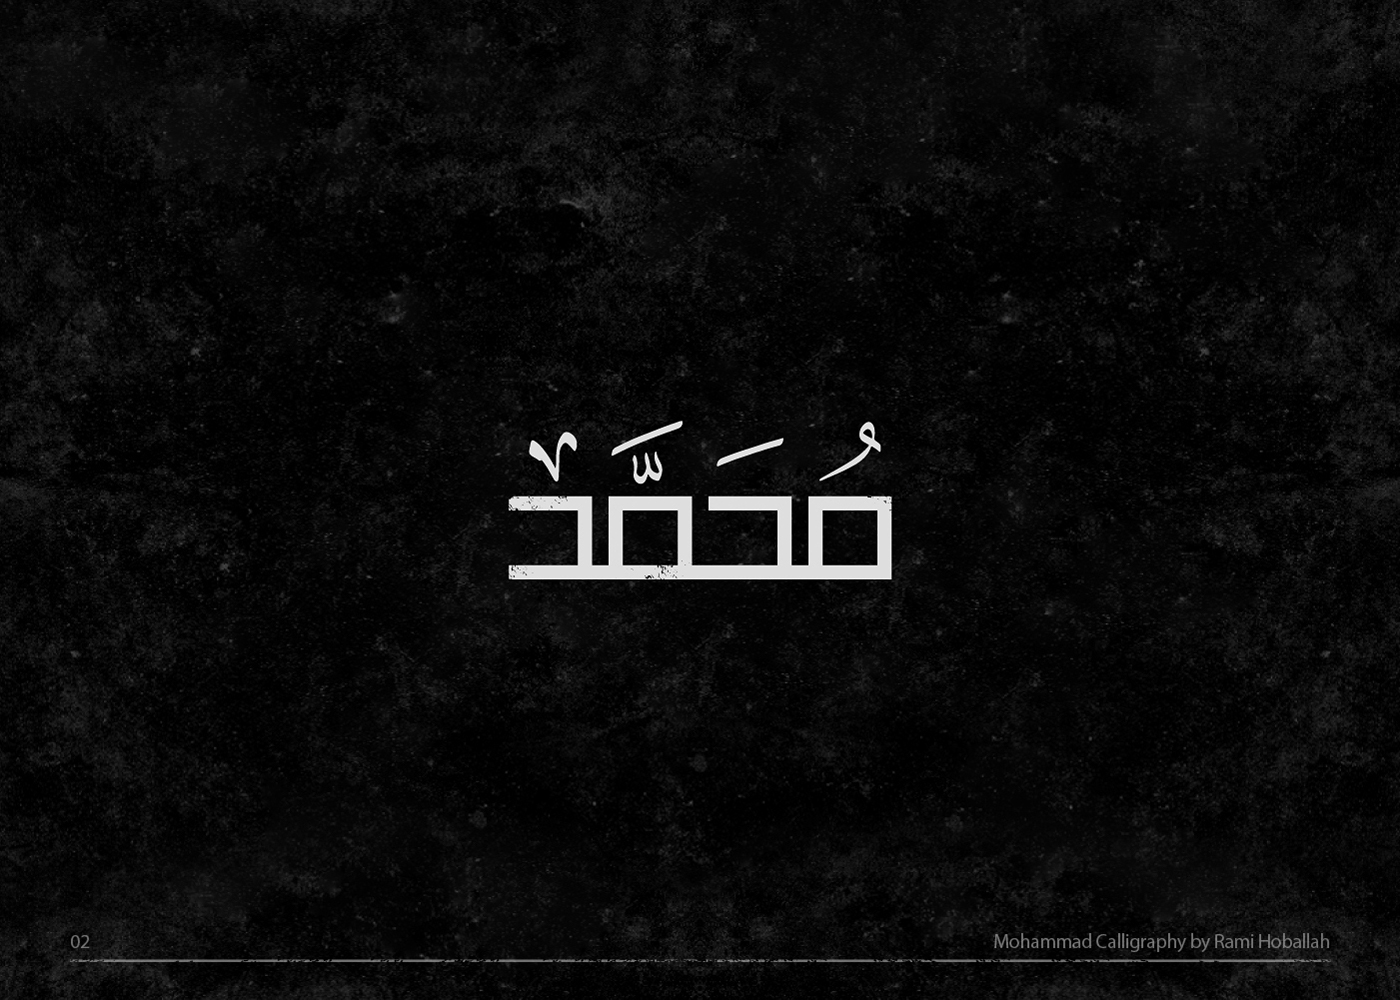 mohammad calligraphic arabic islamic arabian lebanon Kuwait black White name egypt Saudi muslim prophet passenger